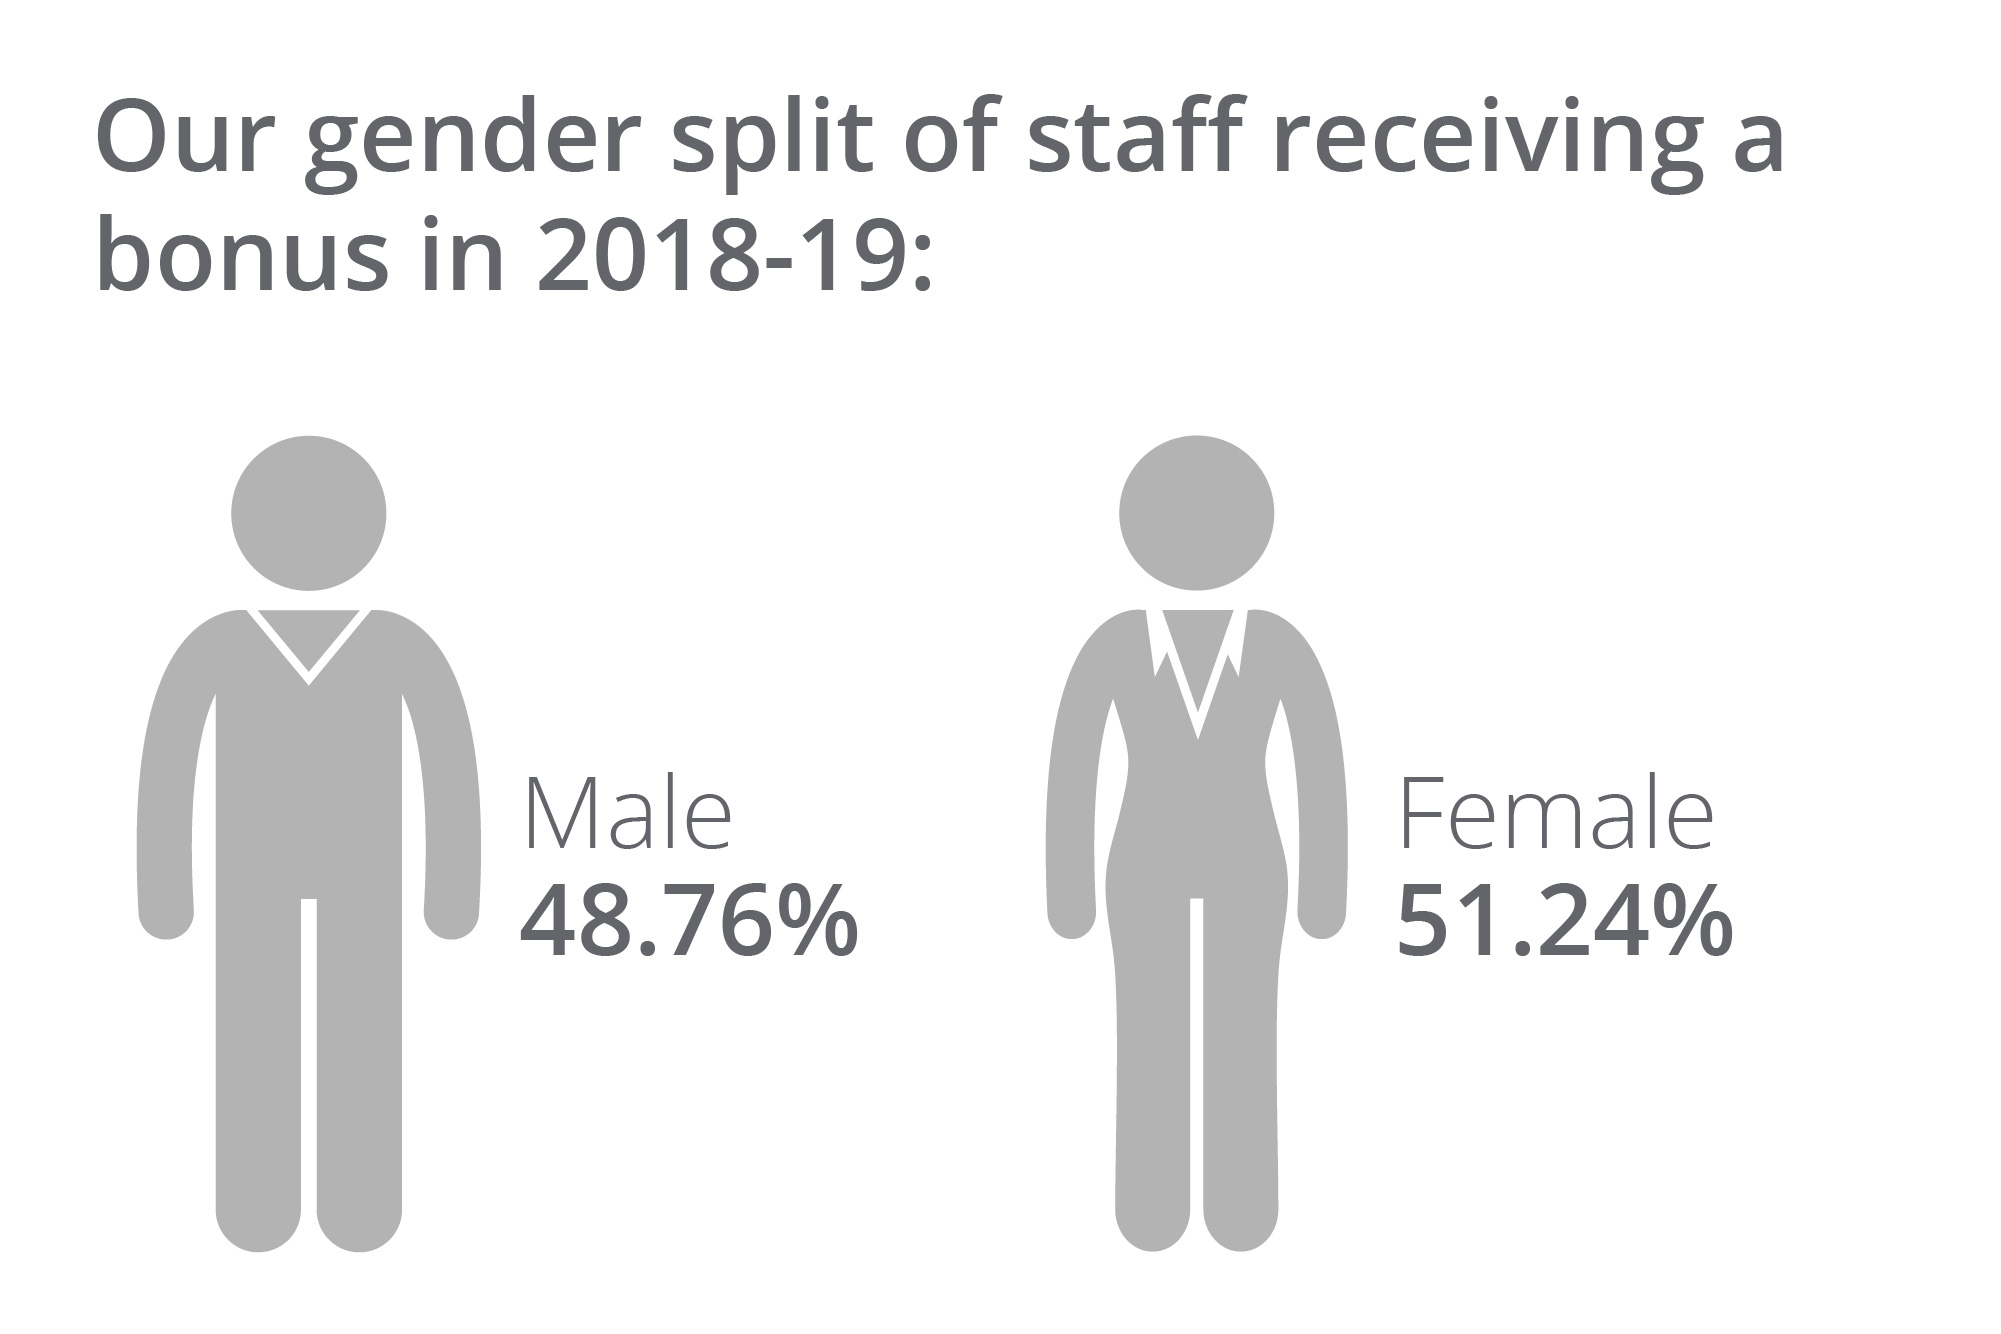 Our gender split of staff receiving a bonus in 2018-19: Male 48.76% Female 51.24%